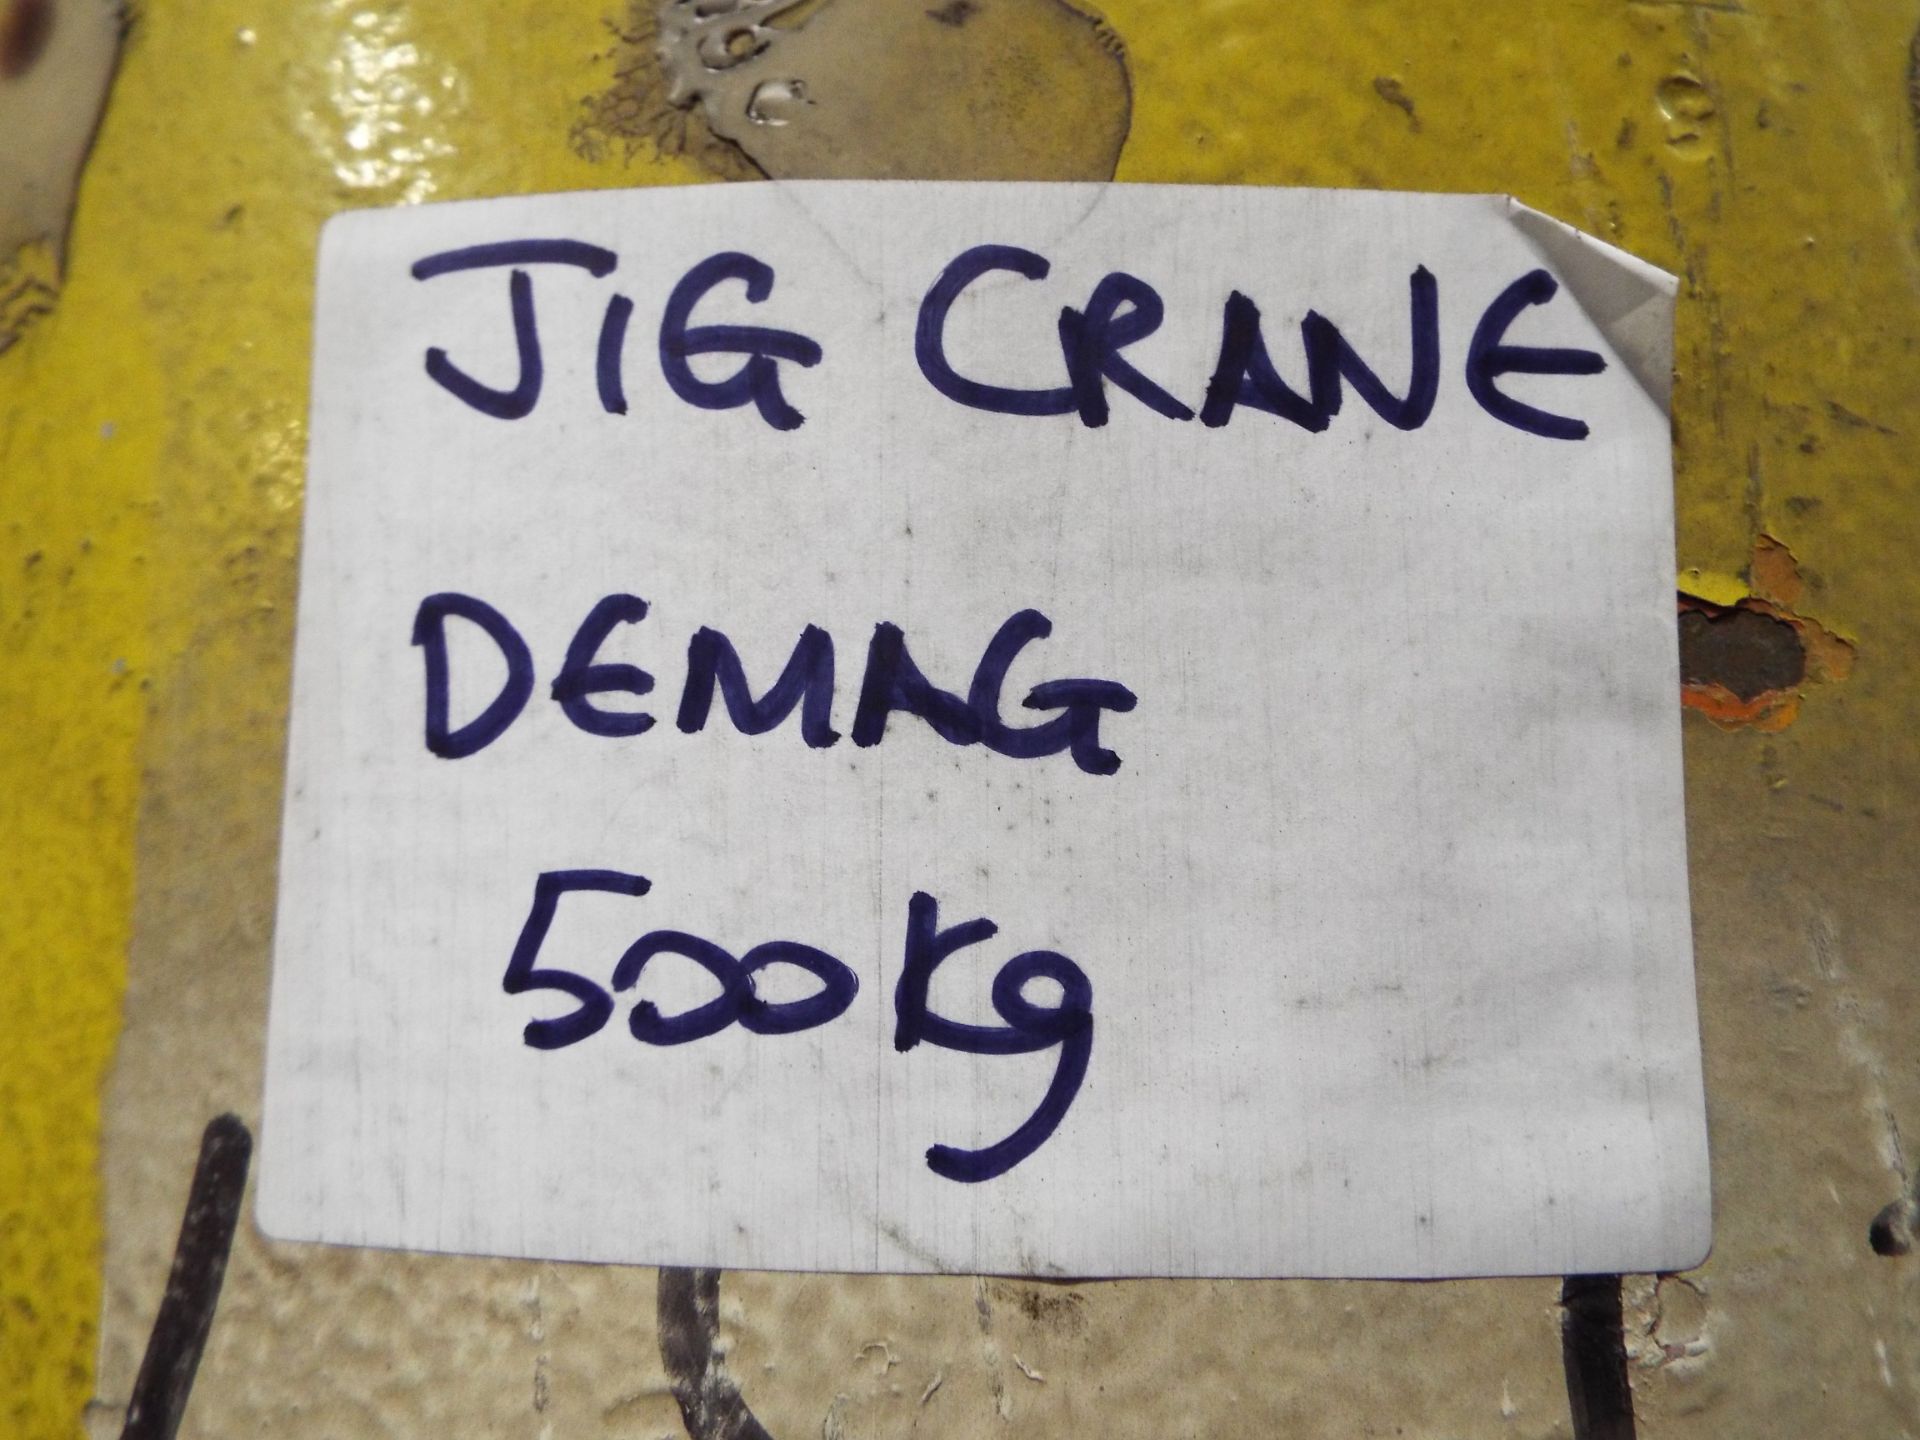 Floor Mounted Swing Jib cw Demag 500Kg Pendant Controlled Hoist. - Image 2 of 3